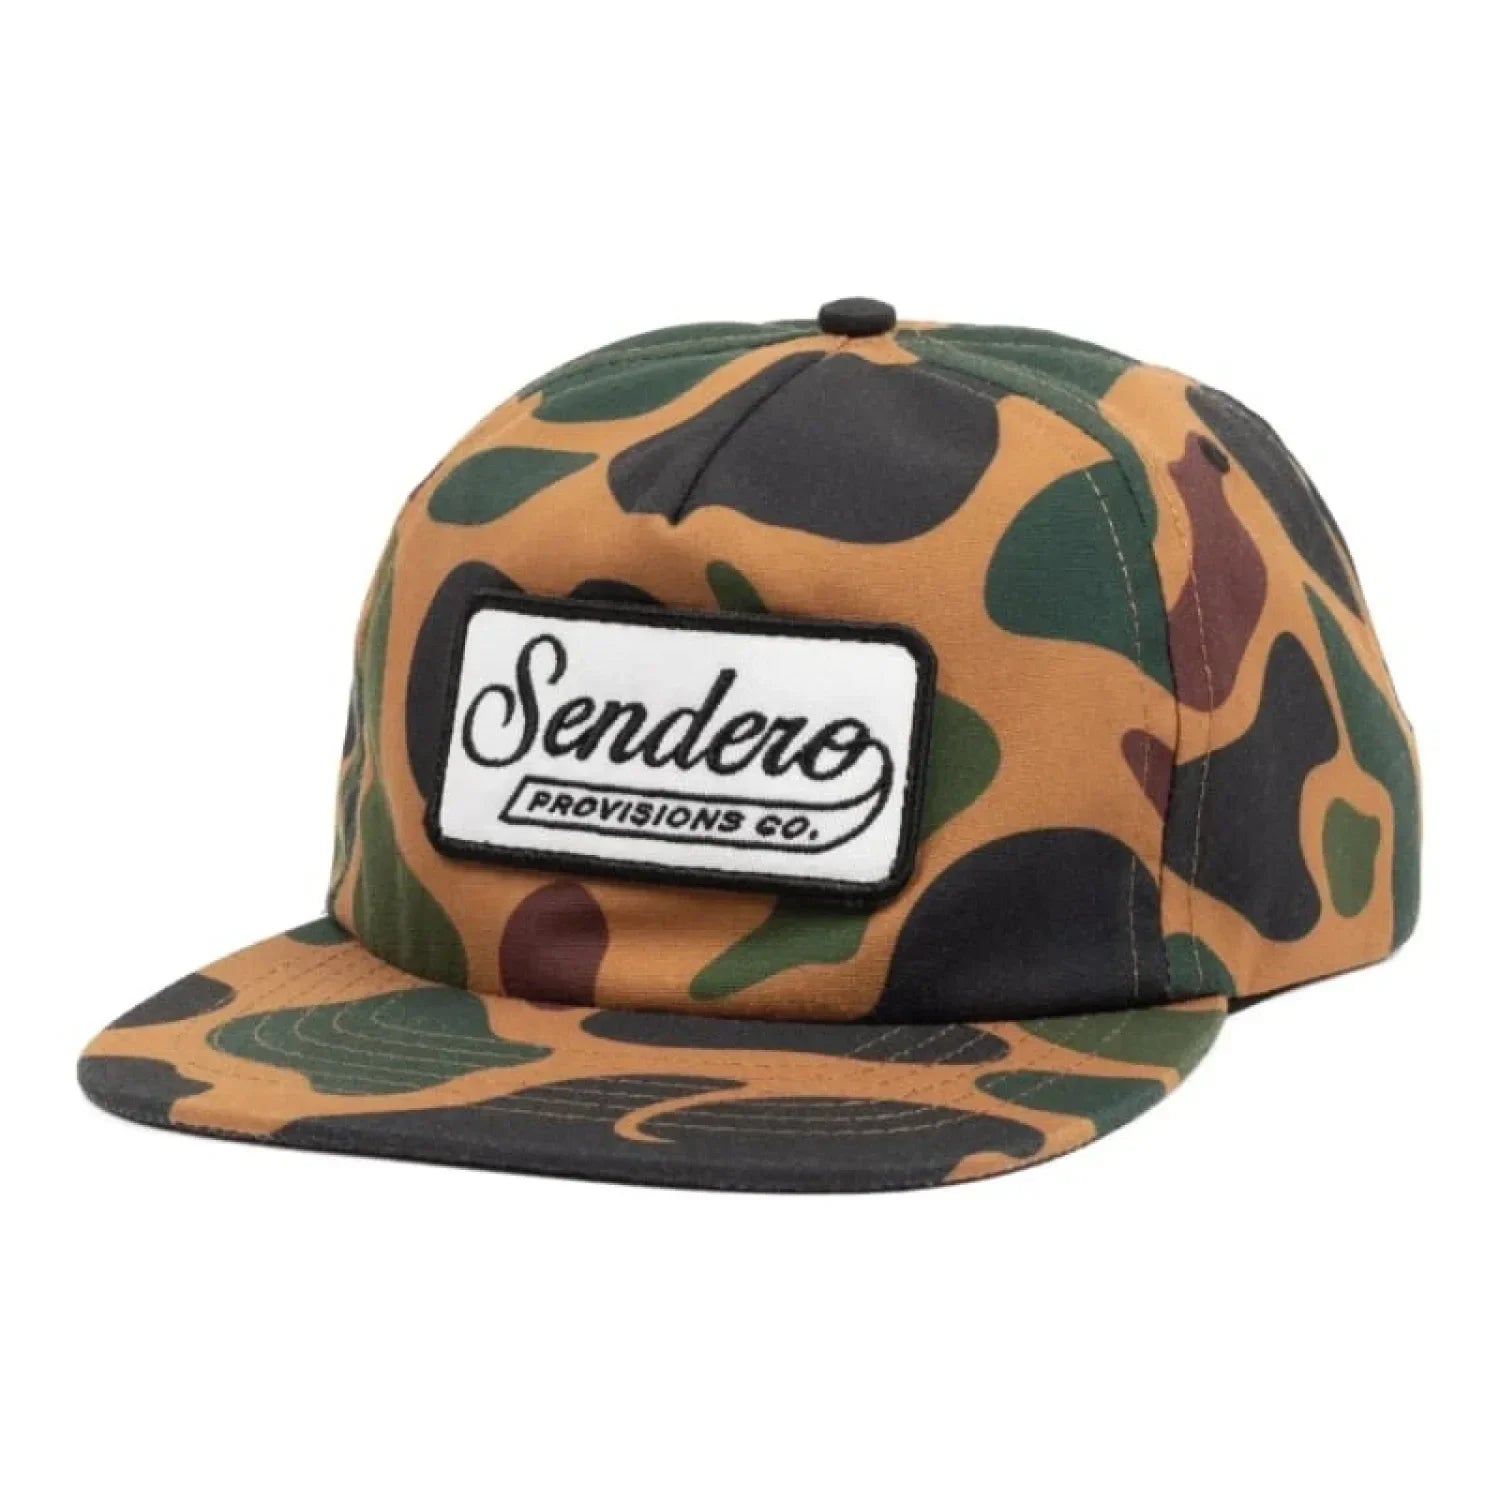 Sendero Provisions Co. HATS - HATS BILLED - HATS BILLED "Hey Slick" Hat CAMO OS